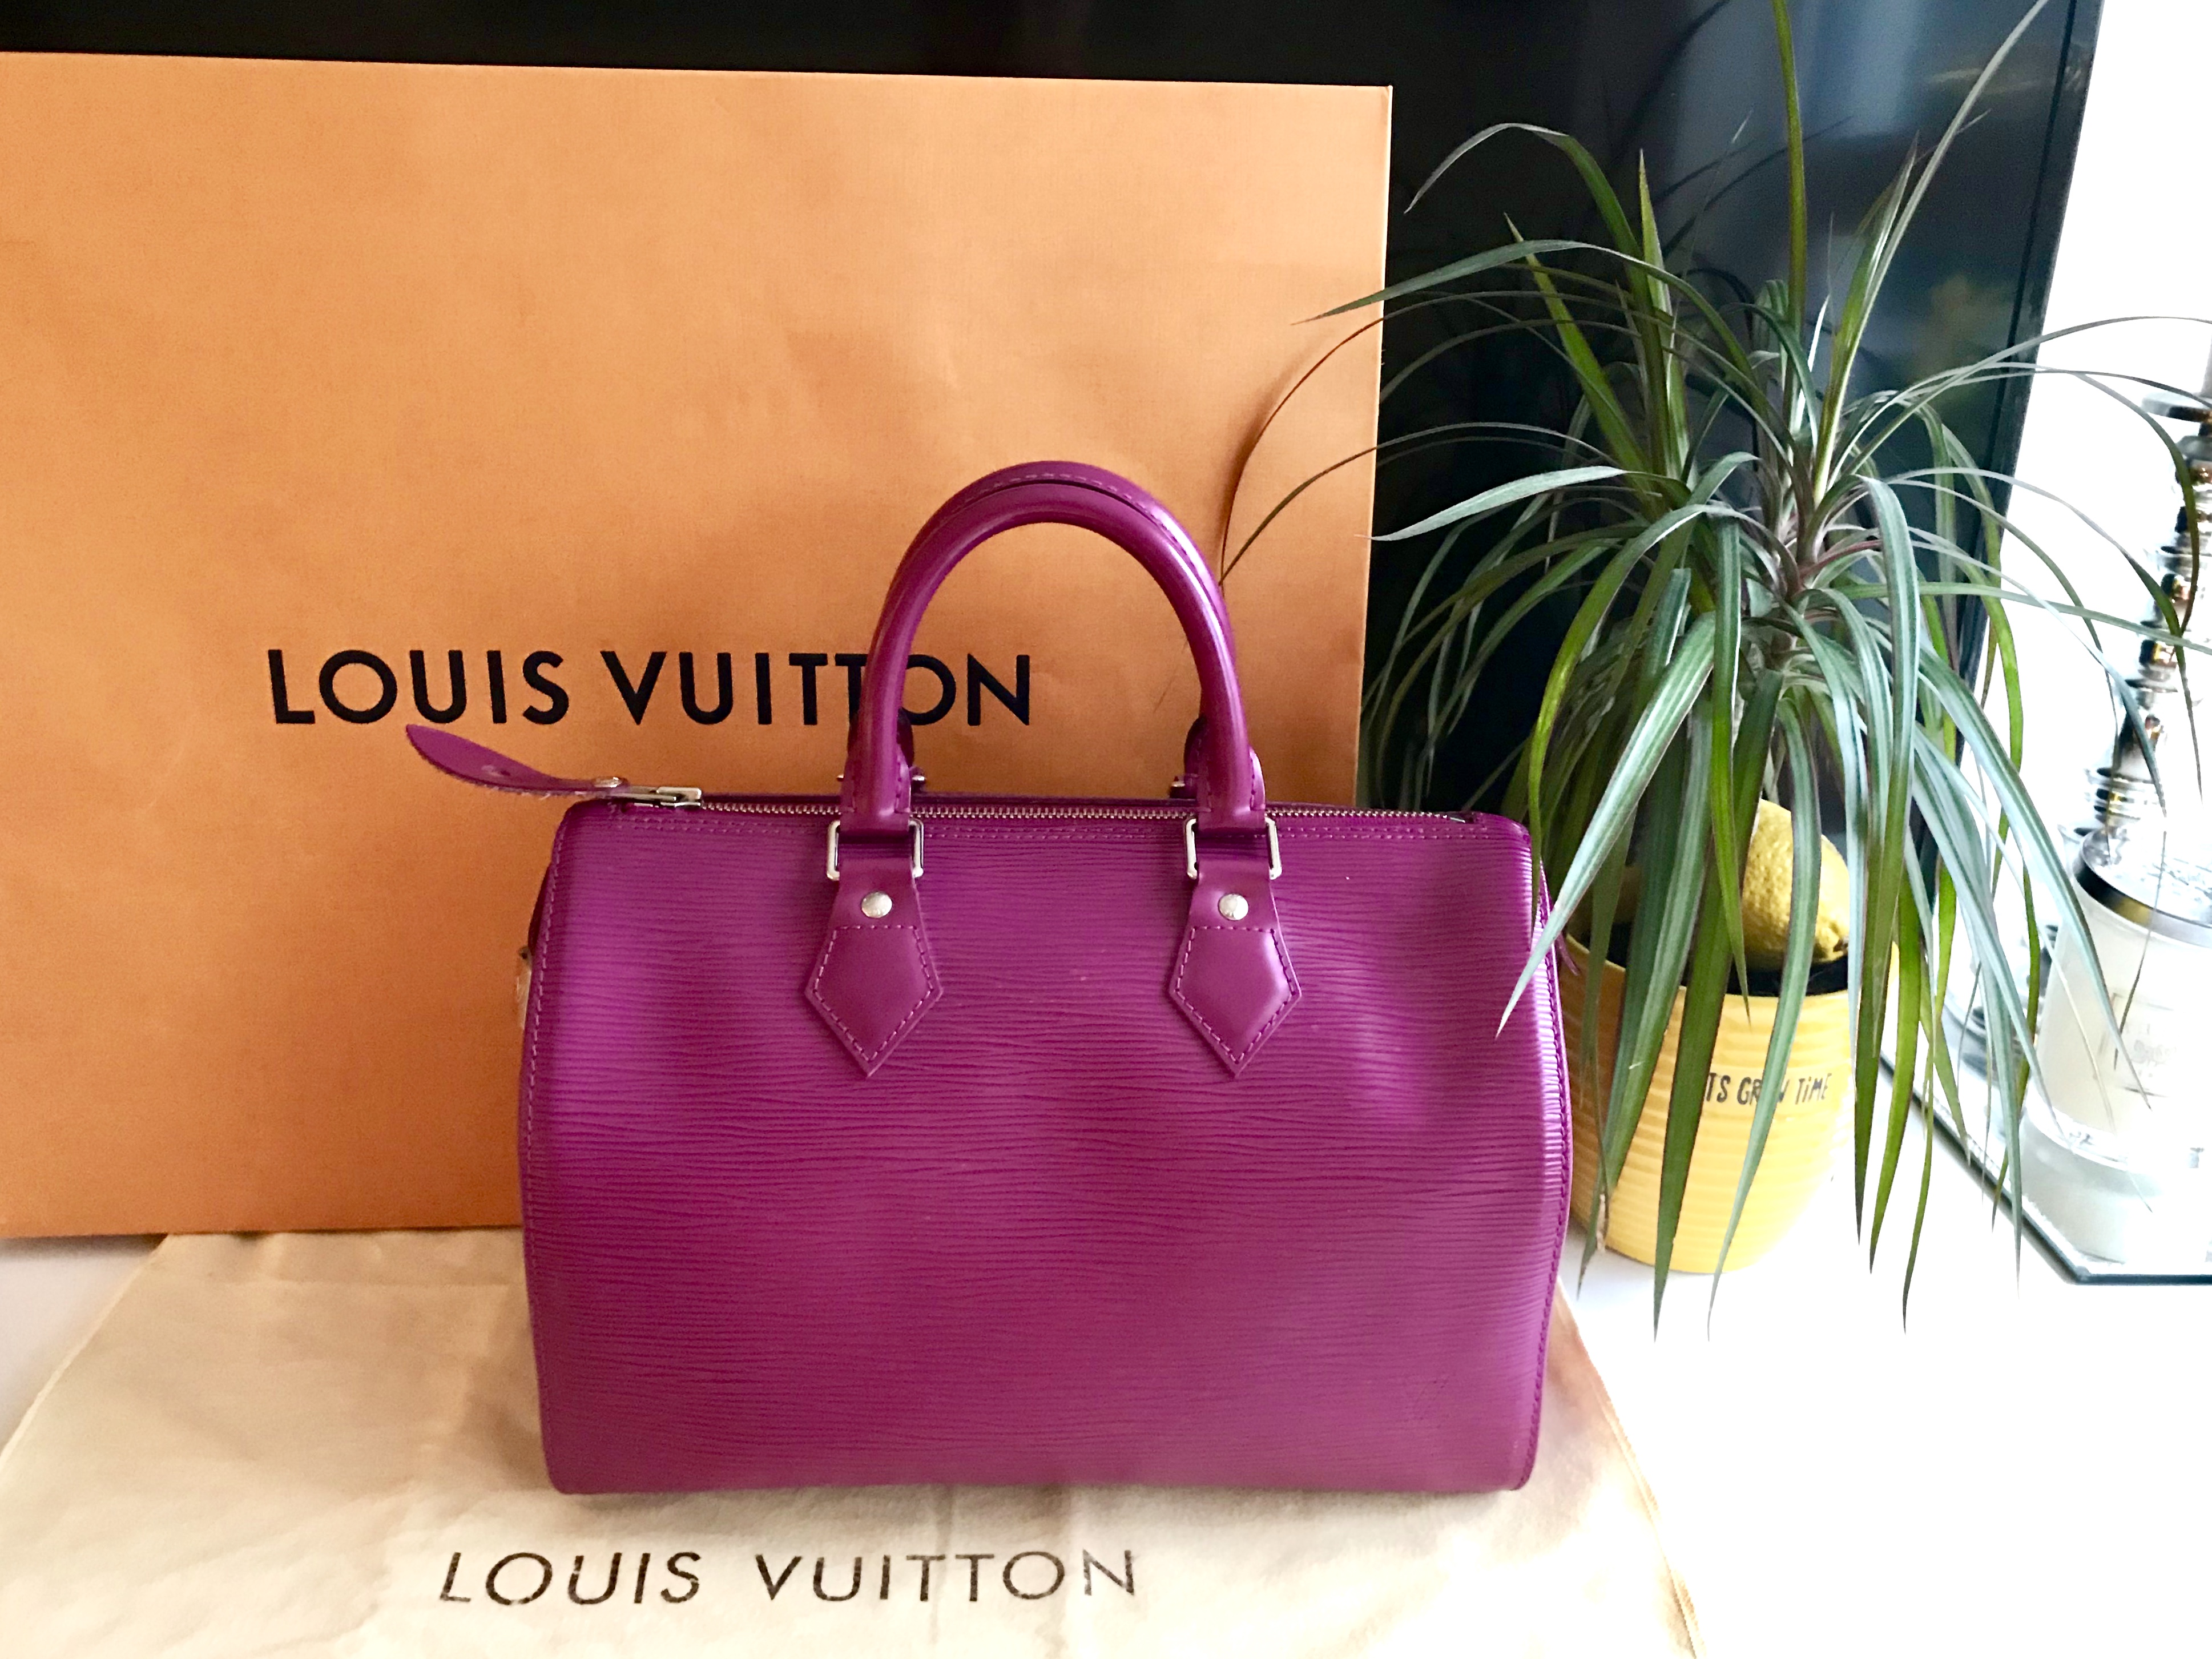 Louis Vuitton Speedy 25 Grenade Epi Leather Handbag